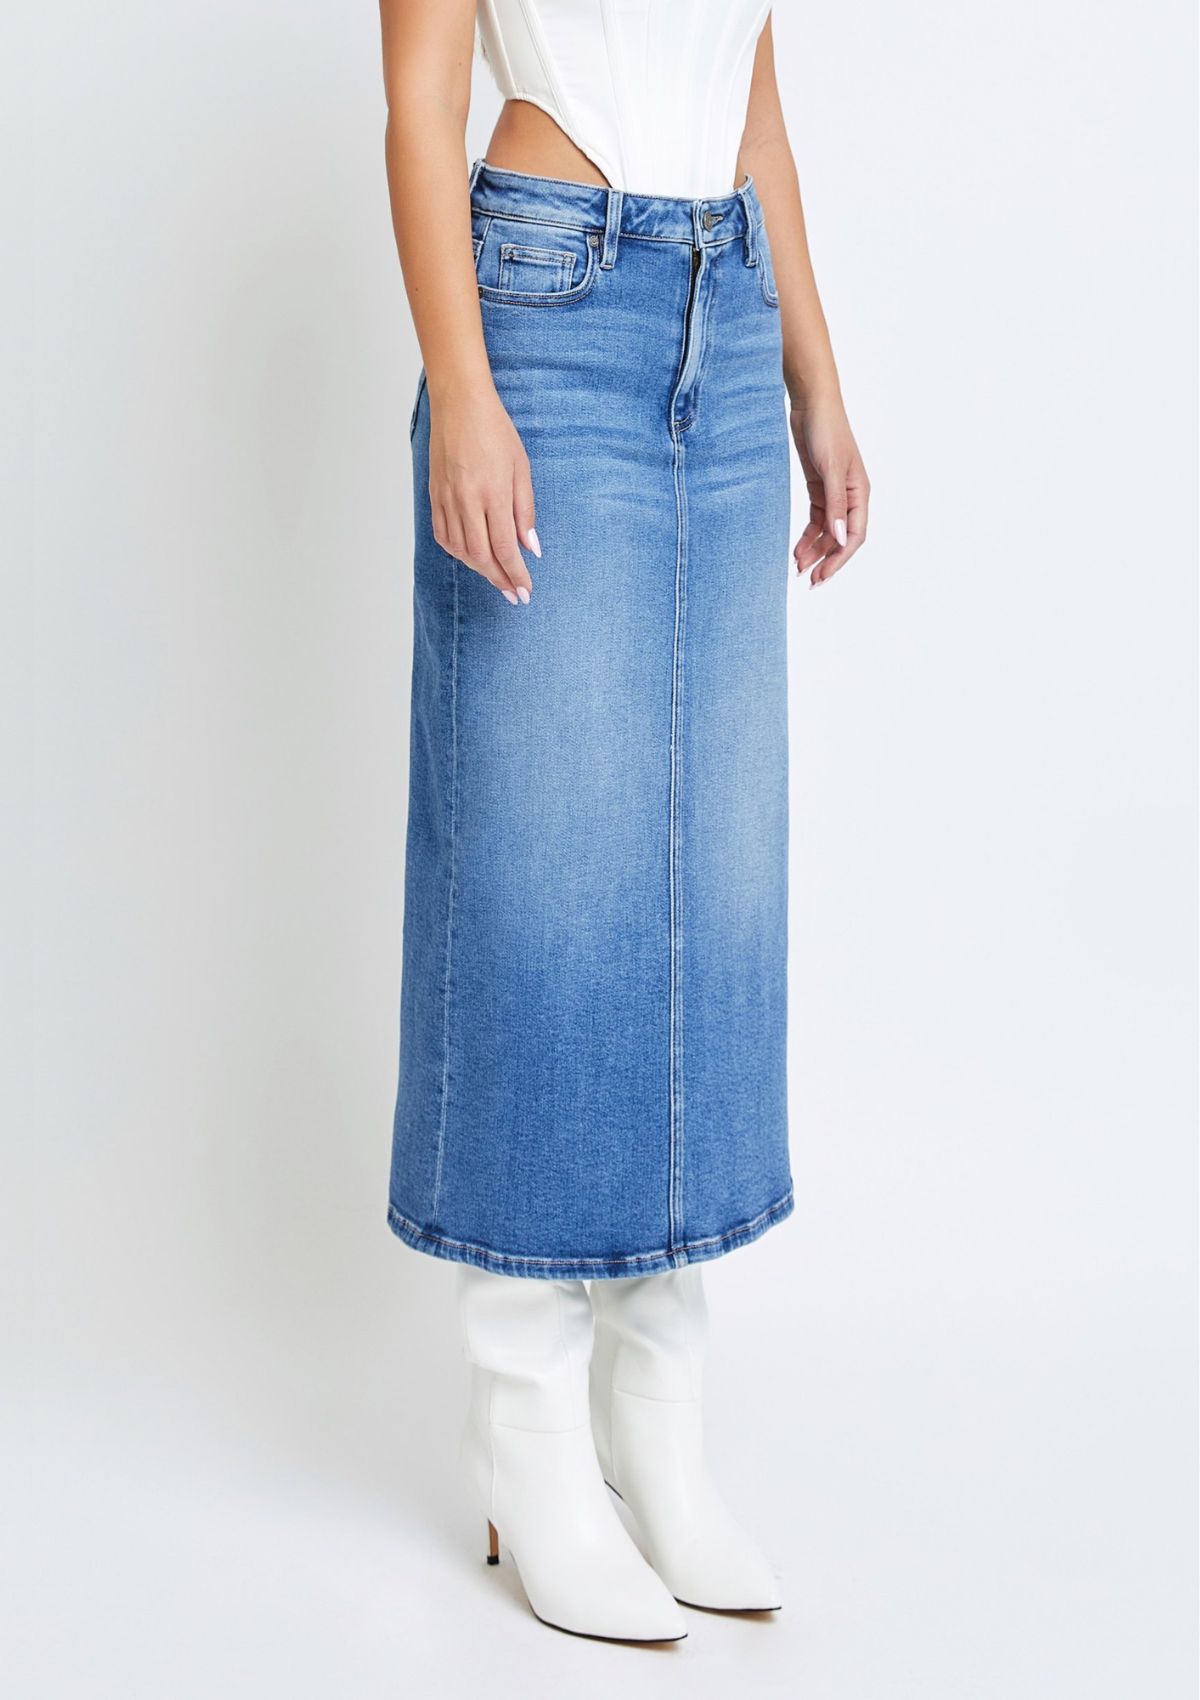 clothing-Fashion-Denim skirt-Ruby Jane.